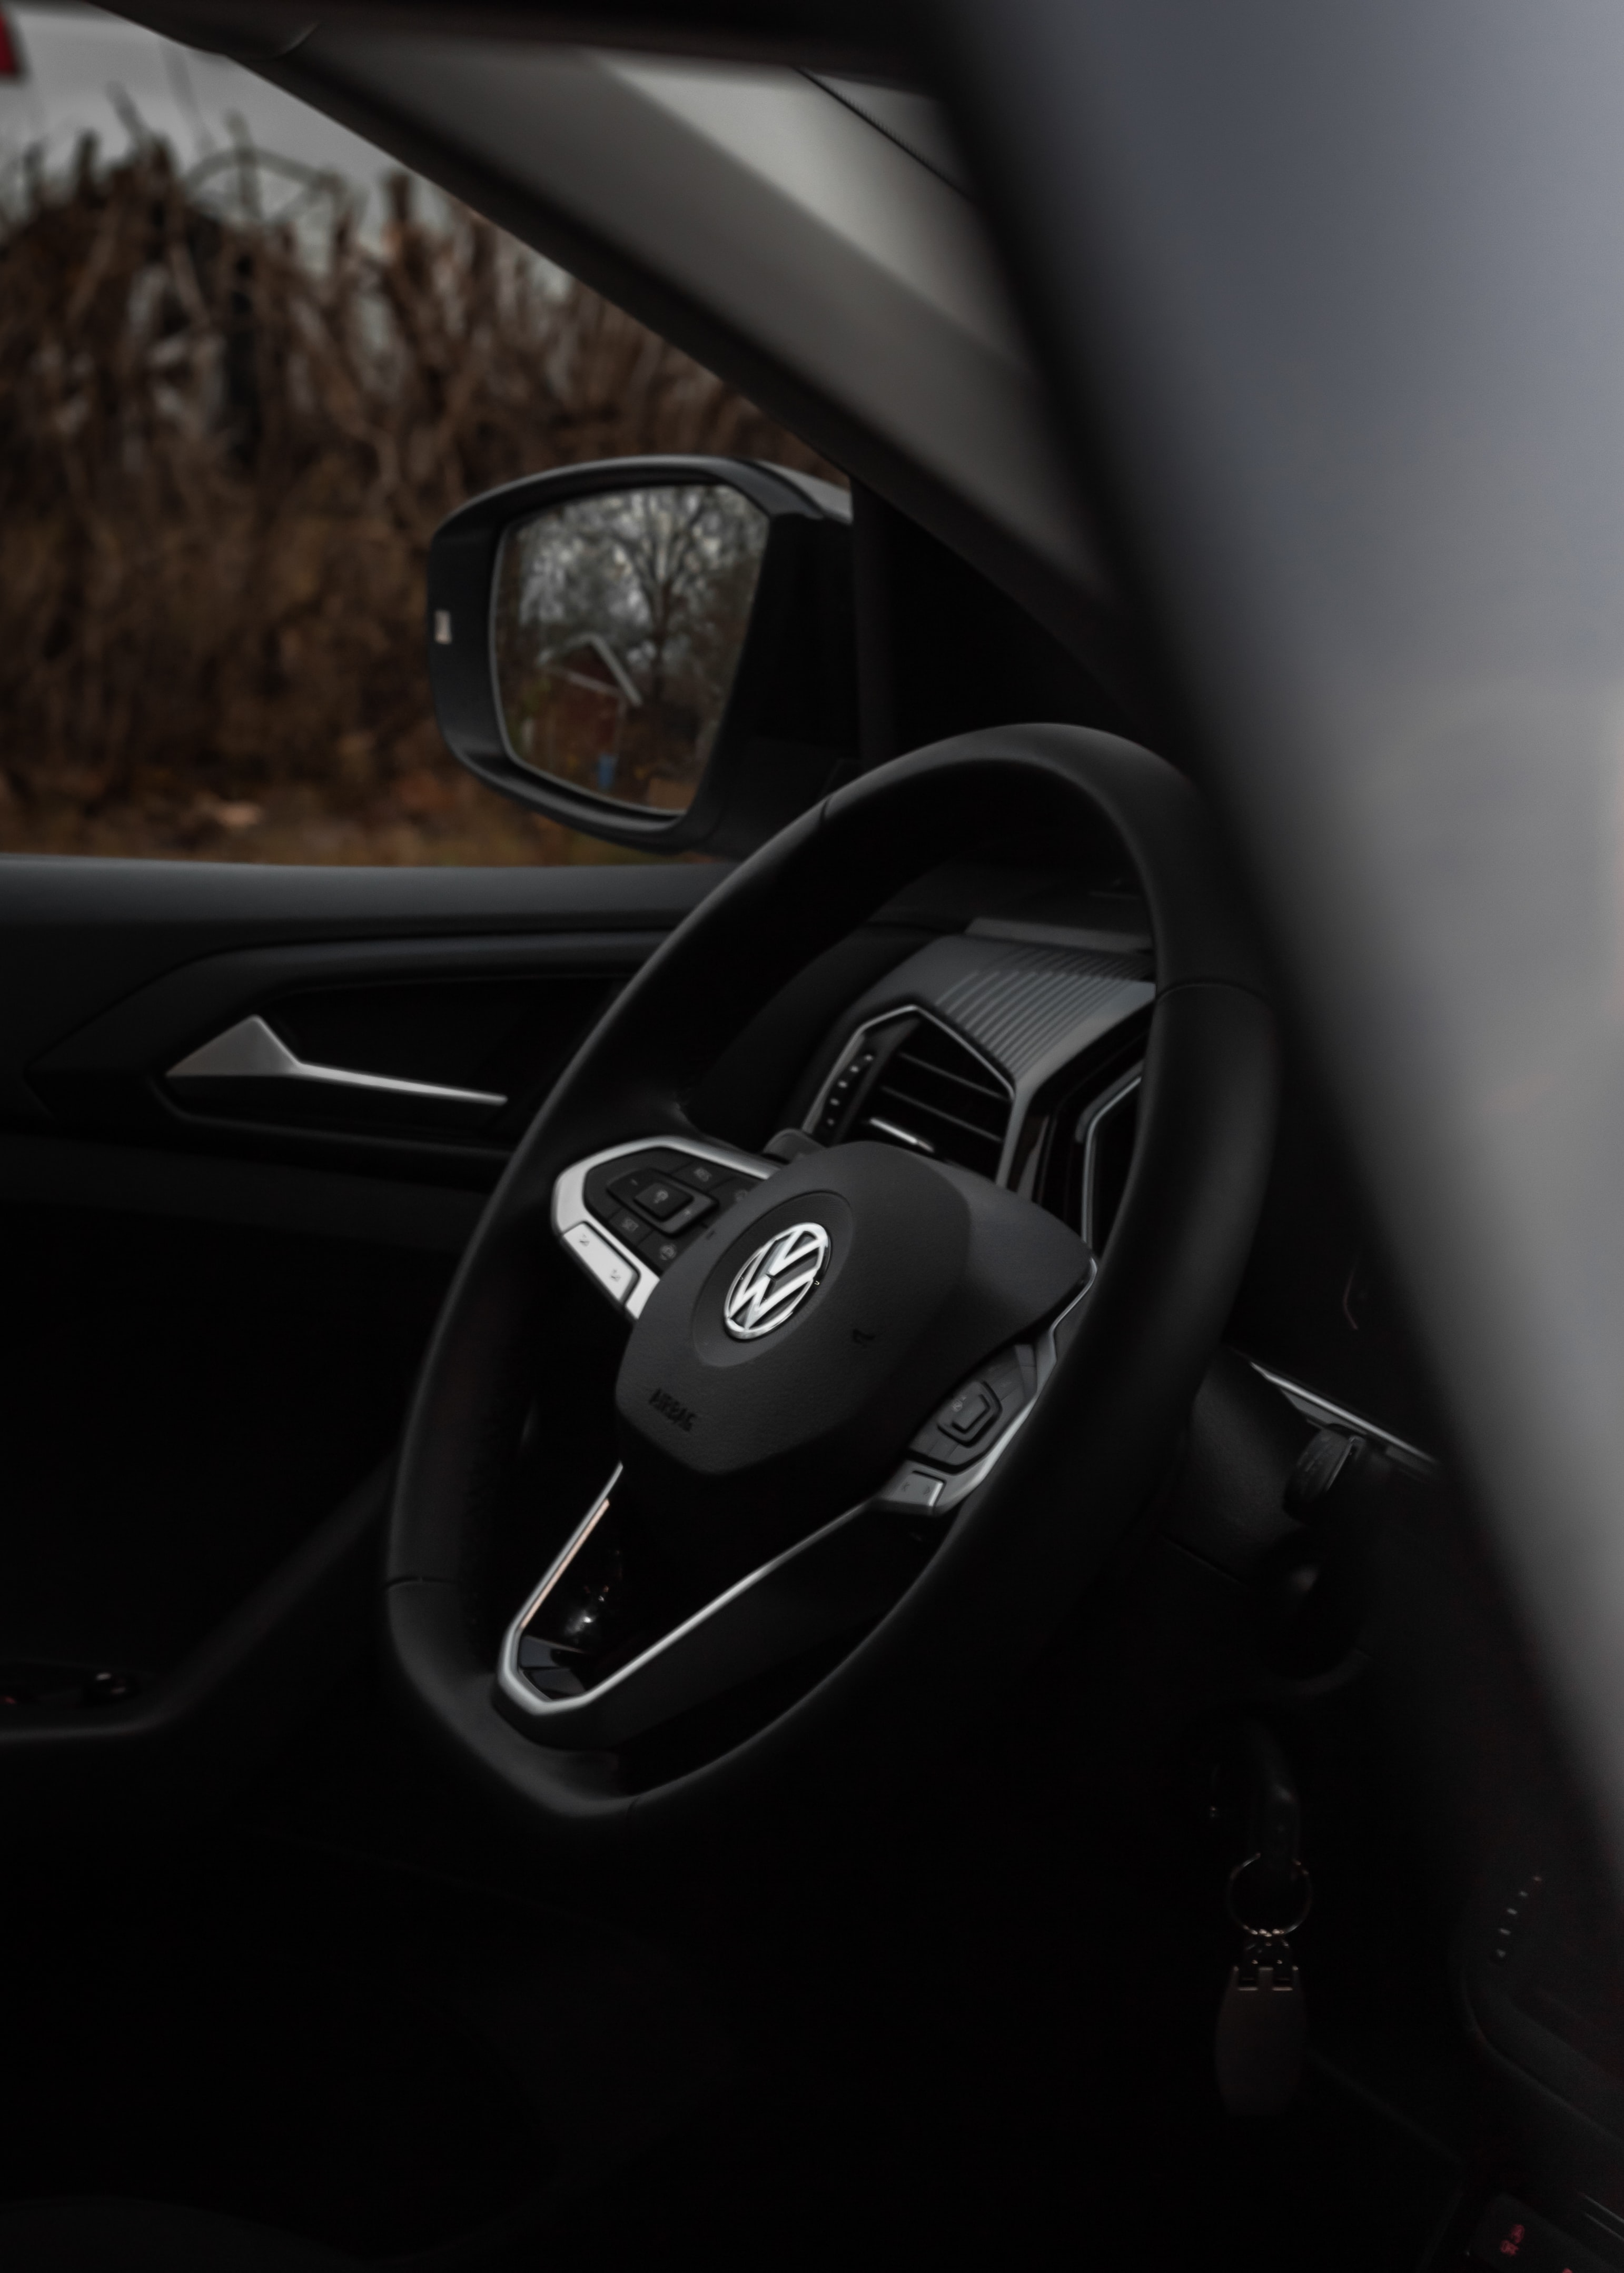 volkswagen, rudder, steering wheel, black, cars, car cell phone wallpapers